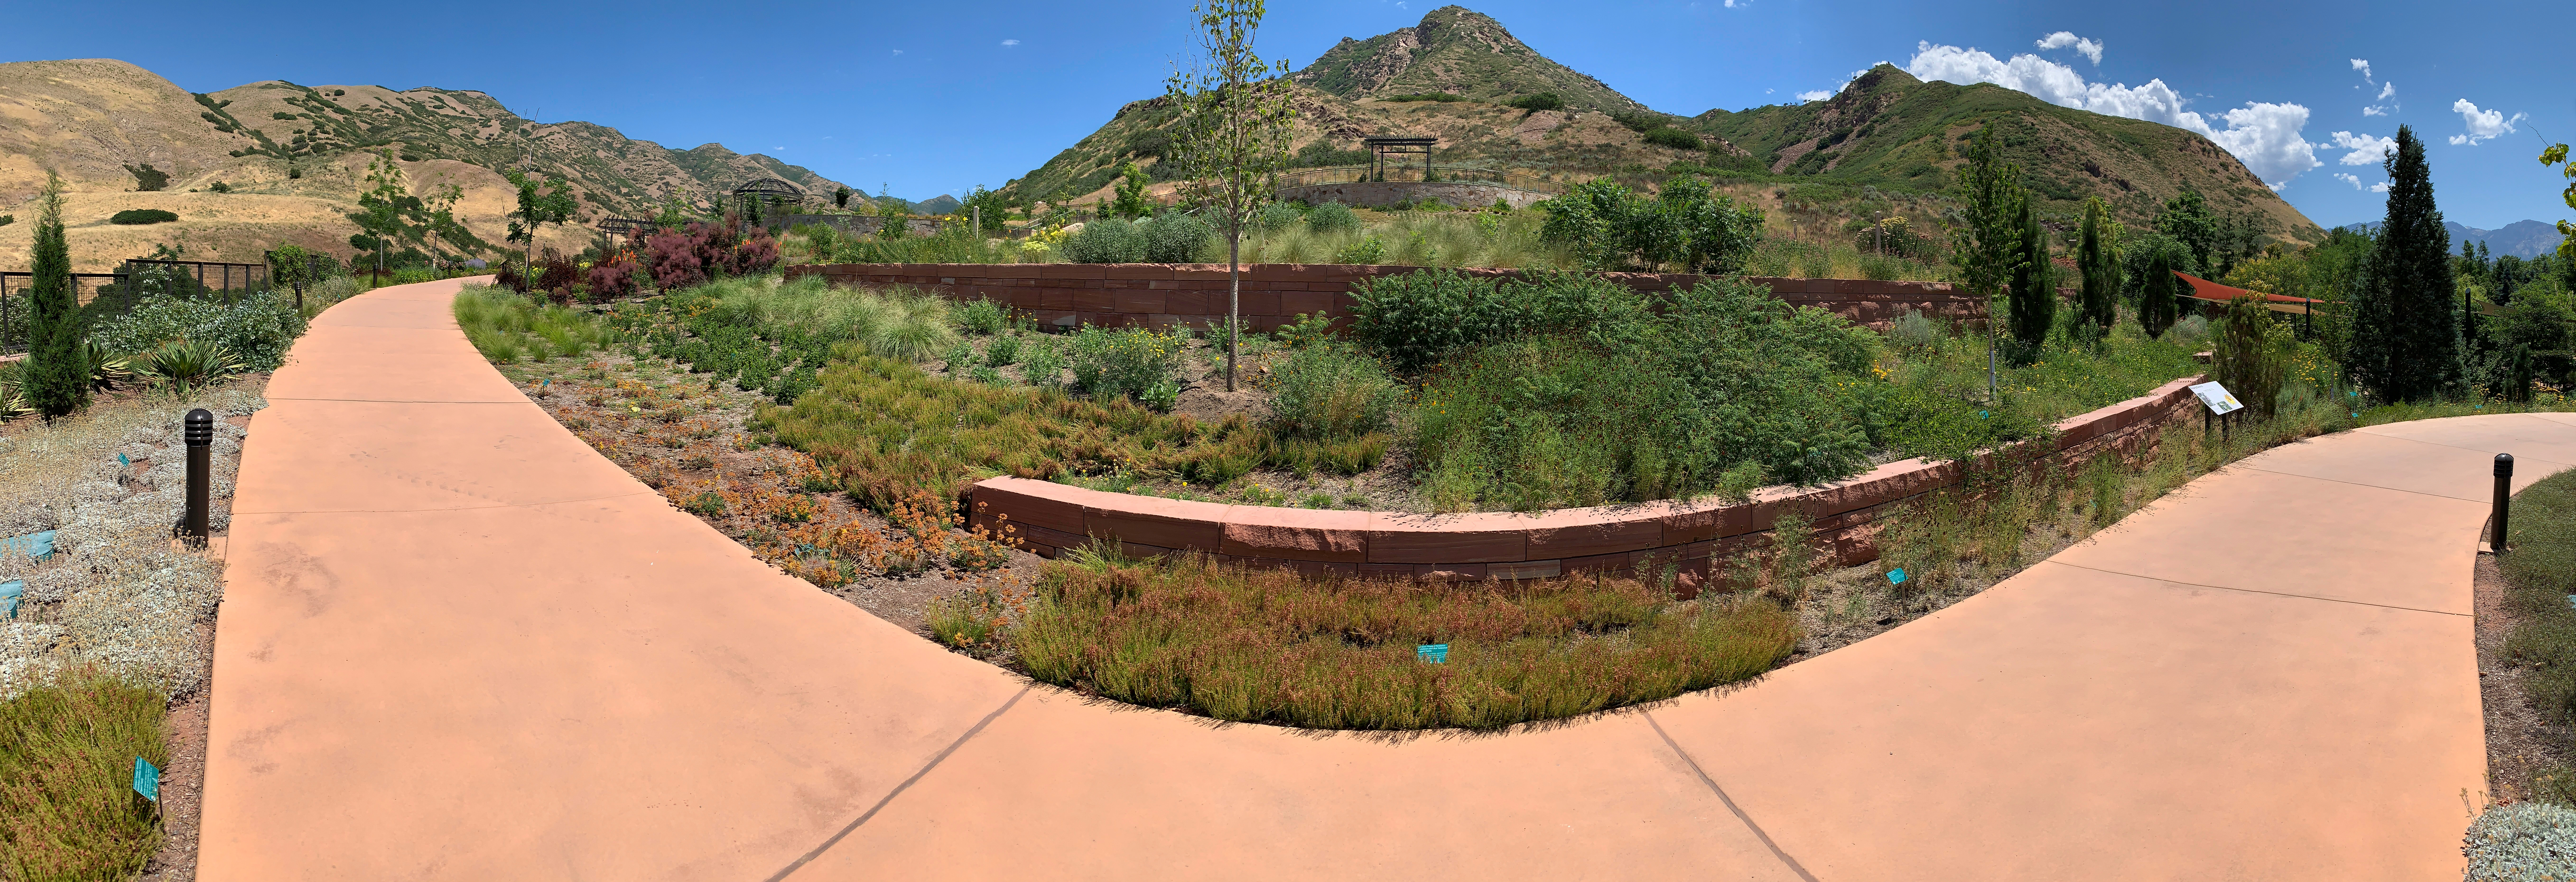 Panoramic View Of Botanical Gardens In Utah Image Free Stock